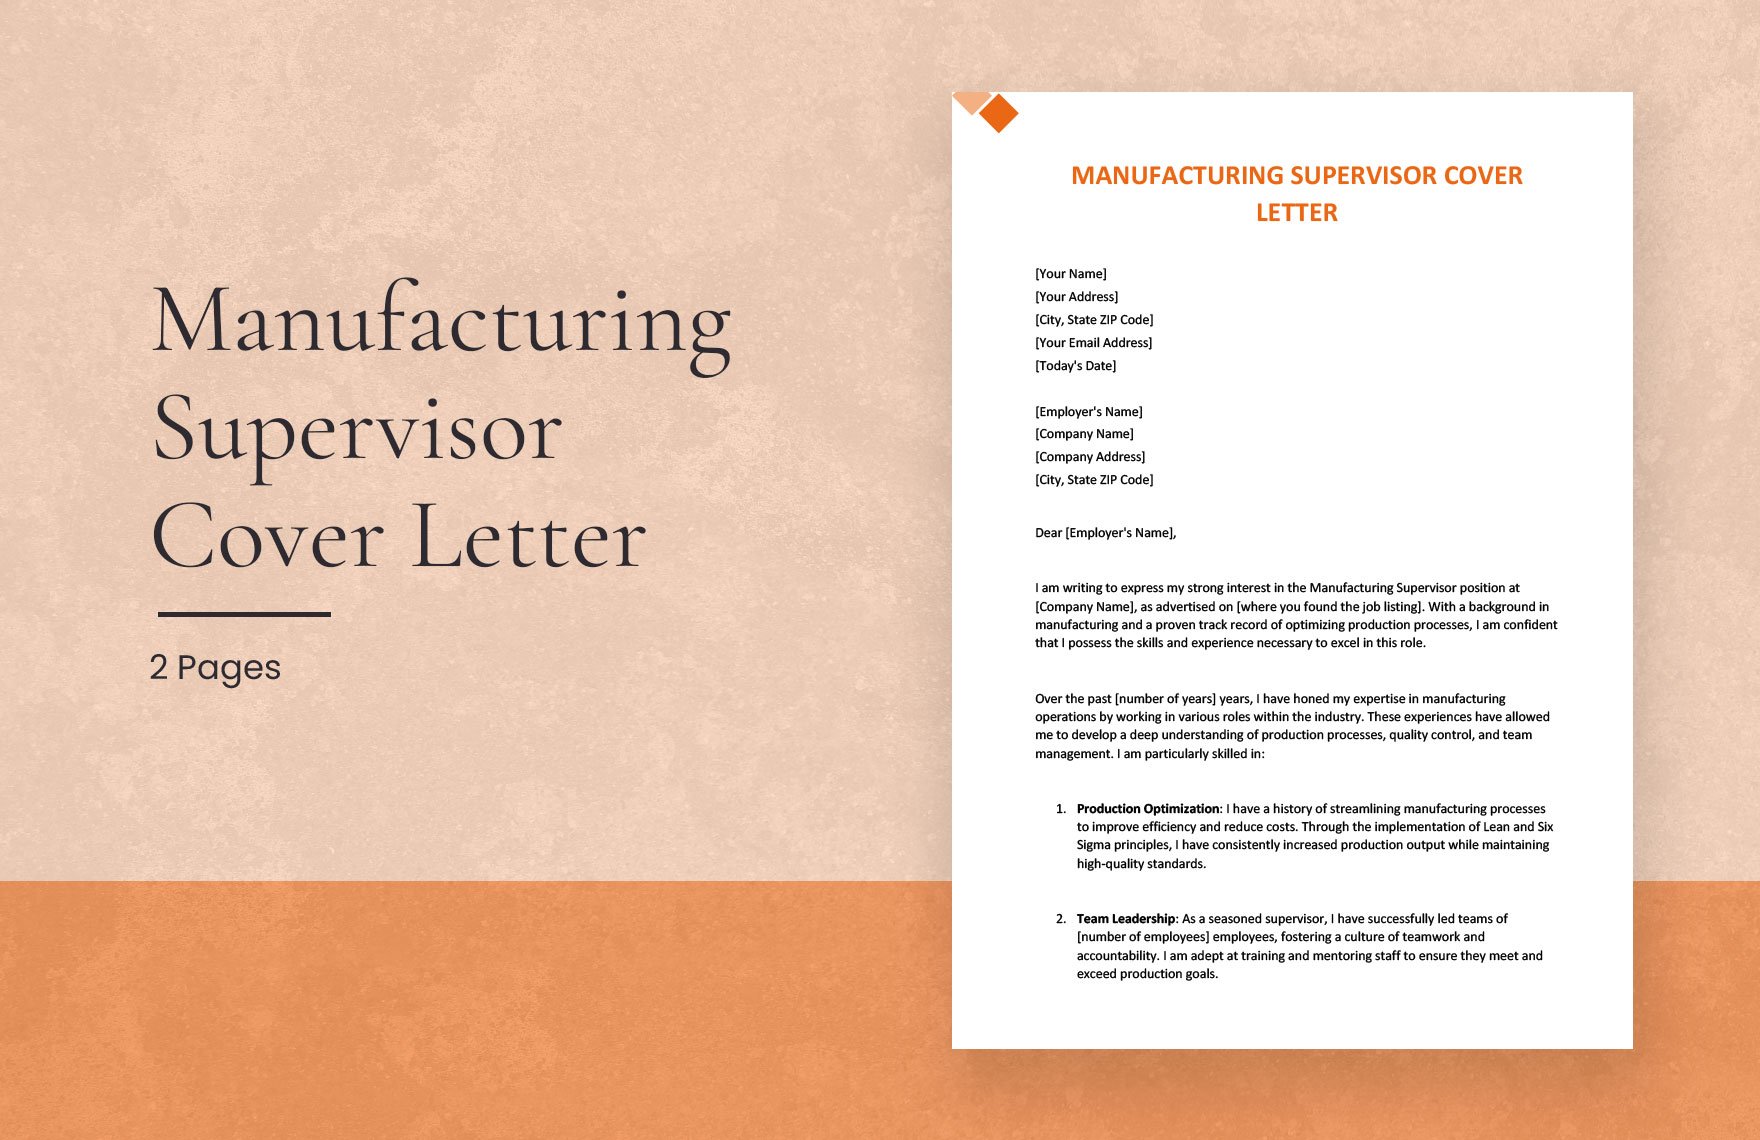 Manufacturing Supervisor Cover Letter in Word, Google Docs - Download ...